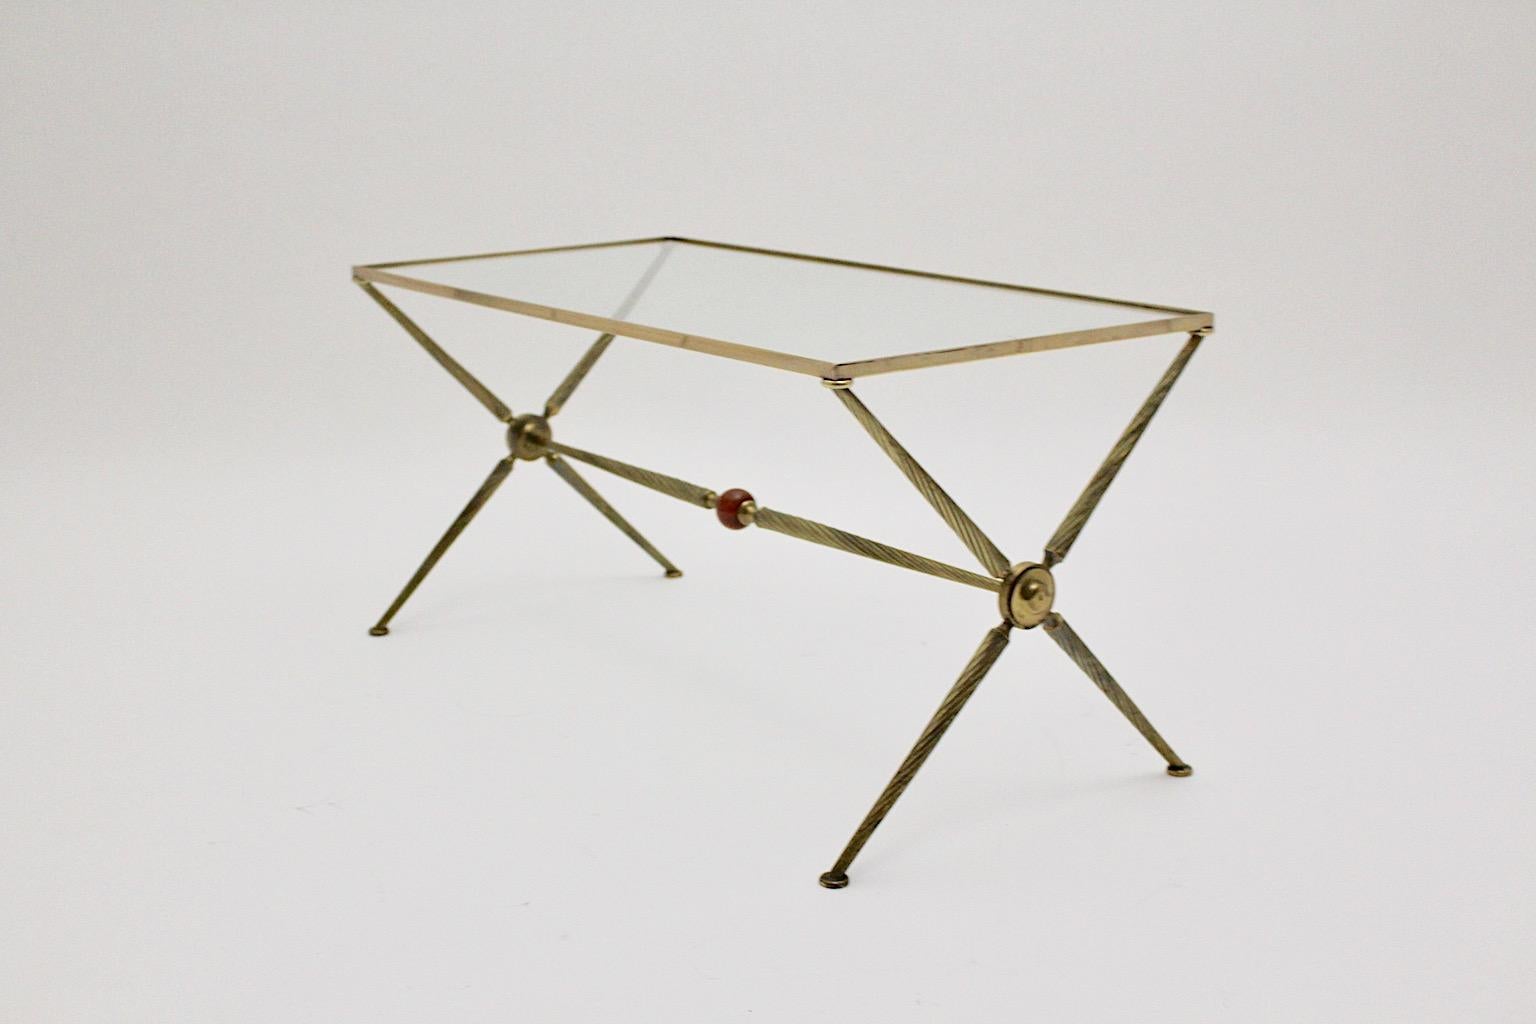 French Mid Century Modern Vintage Brass Bakelite Glass Sofa Table 1950s France For Sale